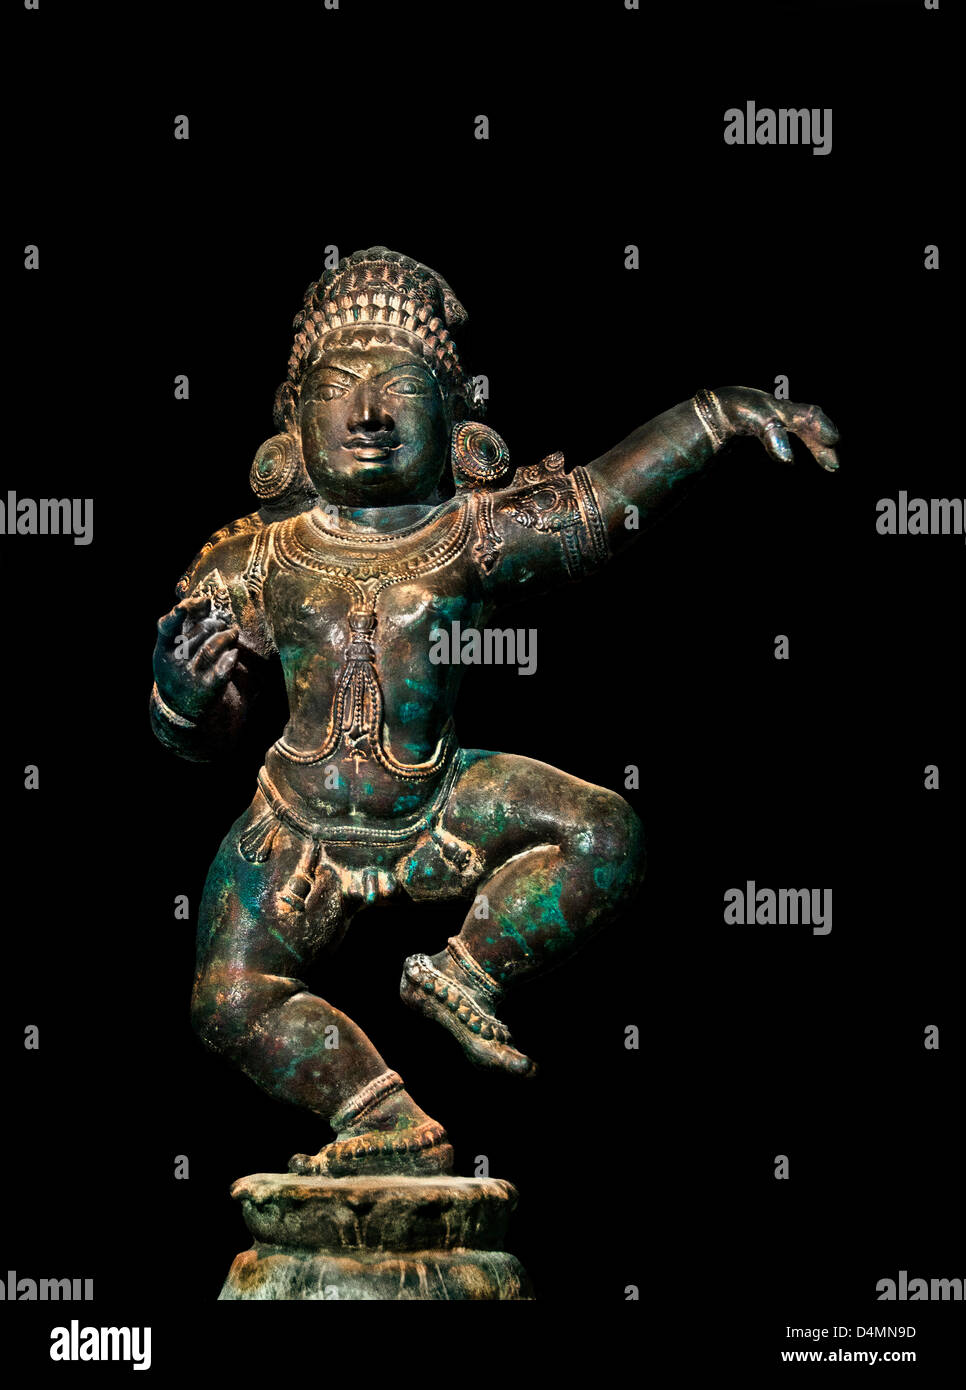 Tirugnanasambandar 15 Century AD Nagappattin the famous saint who has sung praises the Lord Shiva India Hindu Bronze statuette Stock Photo